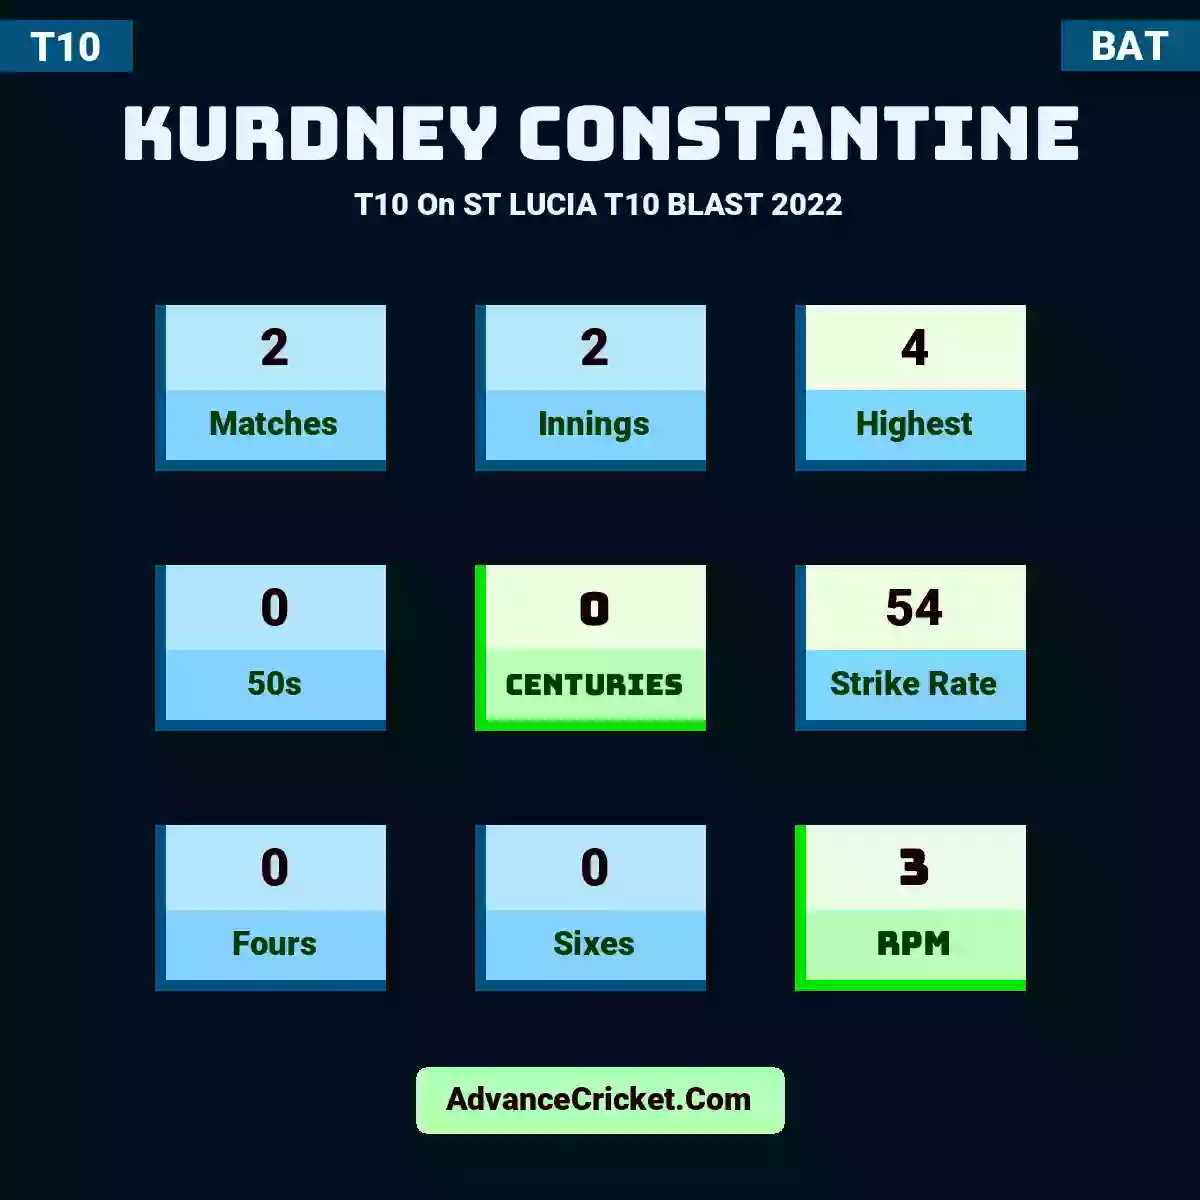 Kurdney Constantine T10  On ST LUCIA T10 BLAST 2022, Kurdney Constantine played 2 matches, scored 4 runs as highest, 0 half-centuries, and 0 centuries, with a strike rate of 54. K.Constantine hit 0 fours and 0 sixes, with an RPM of 3.